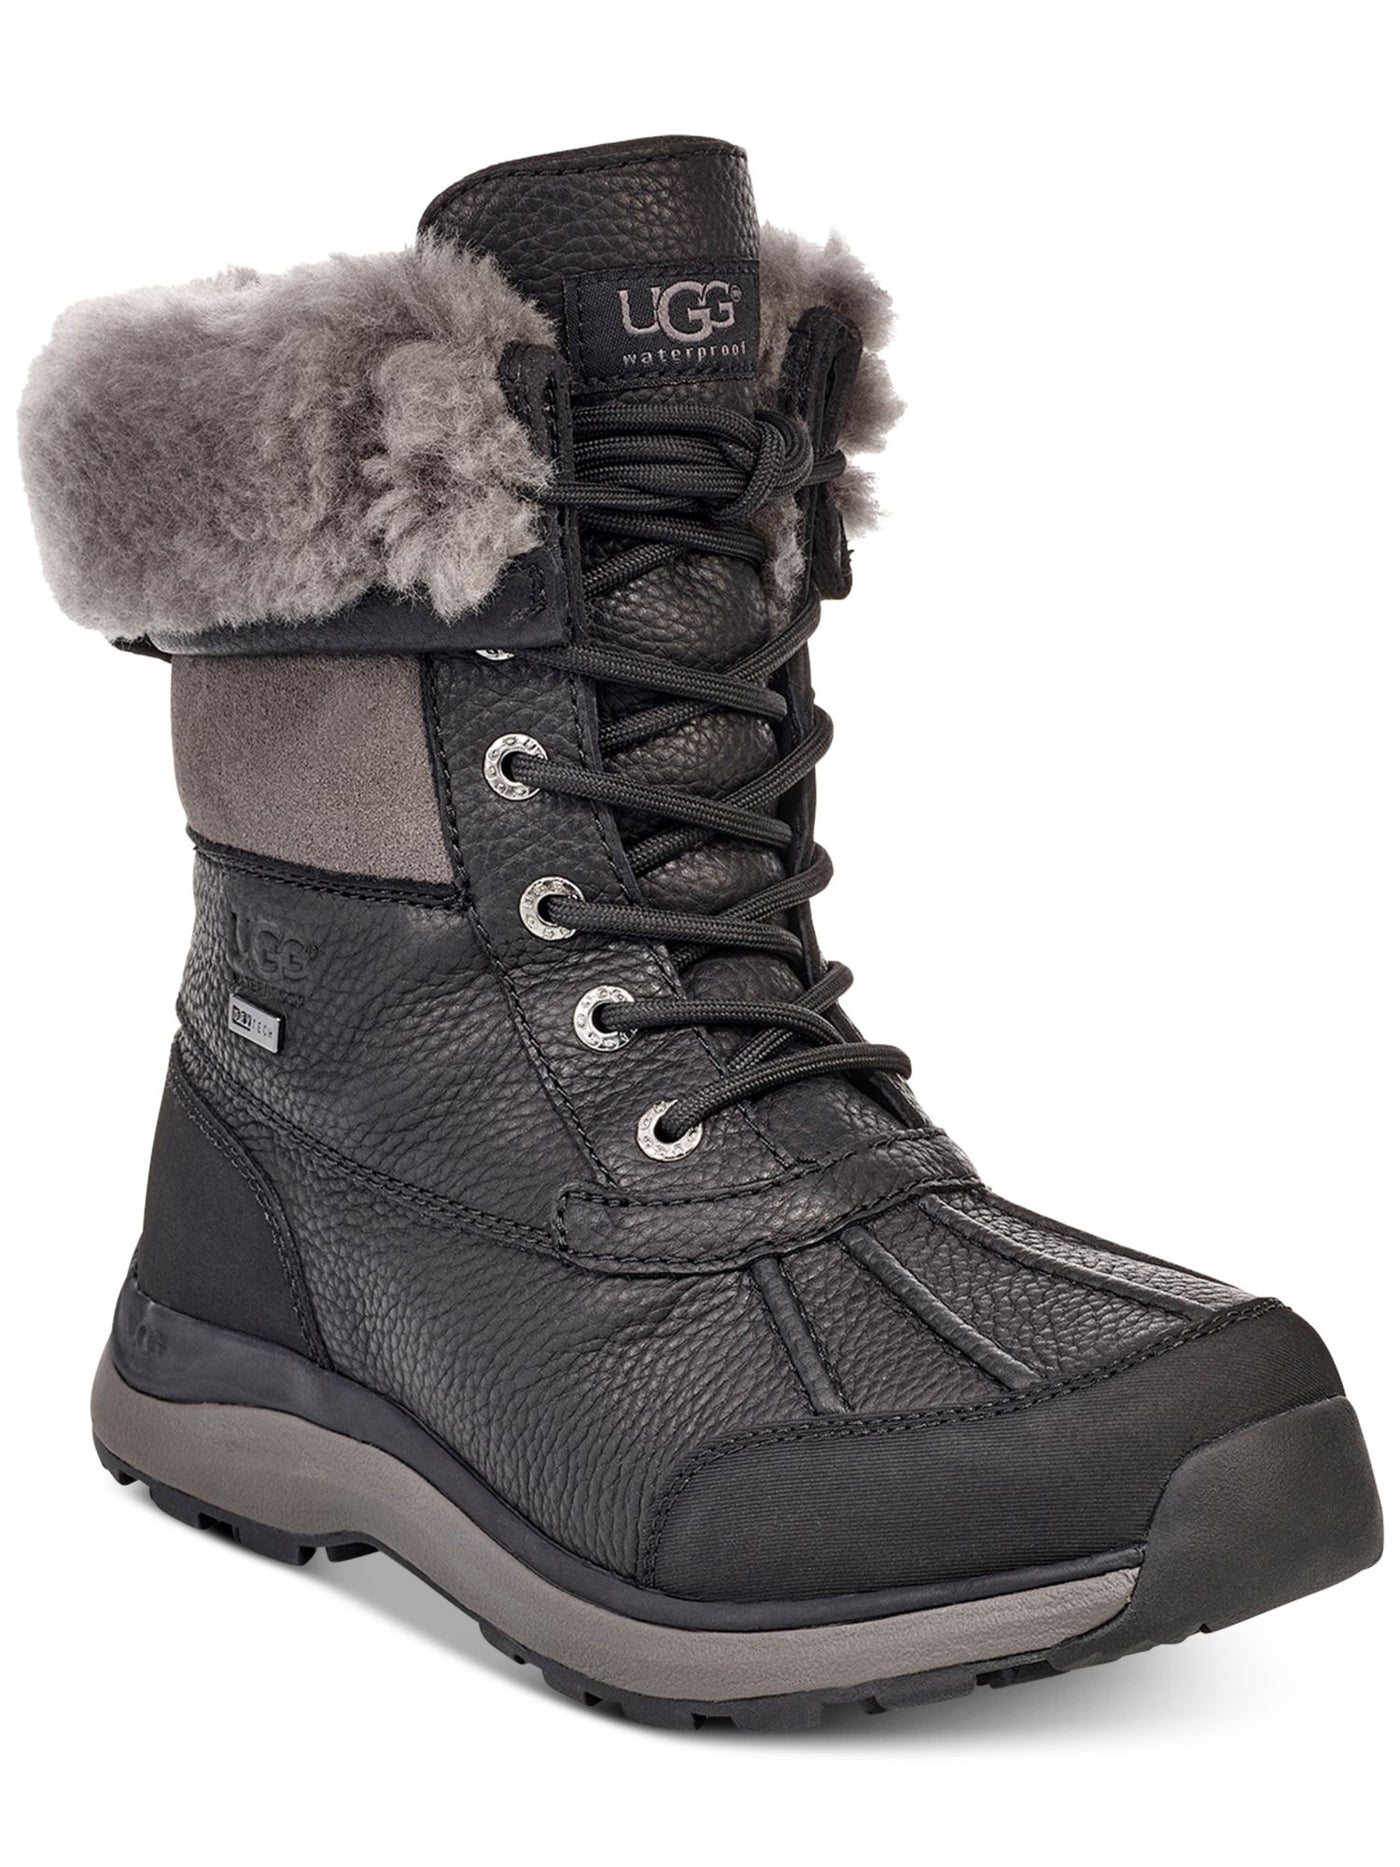 UGG Womens Black Padded Waterproof Adirondack Iii Round Toe Lace-Up Winter Boots 8